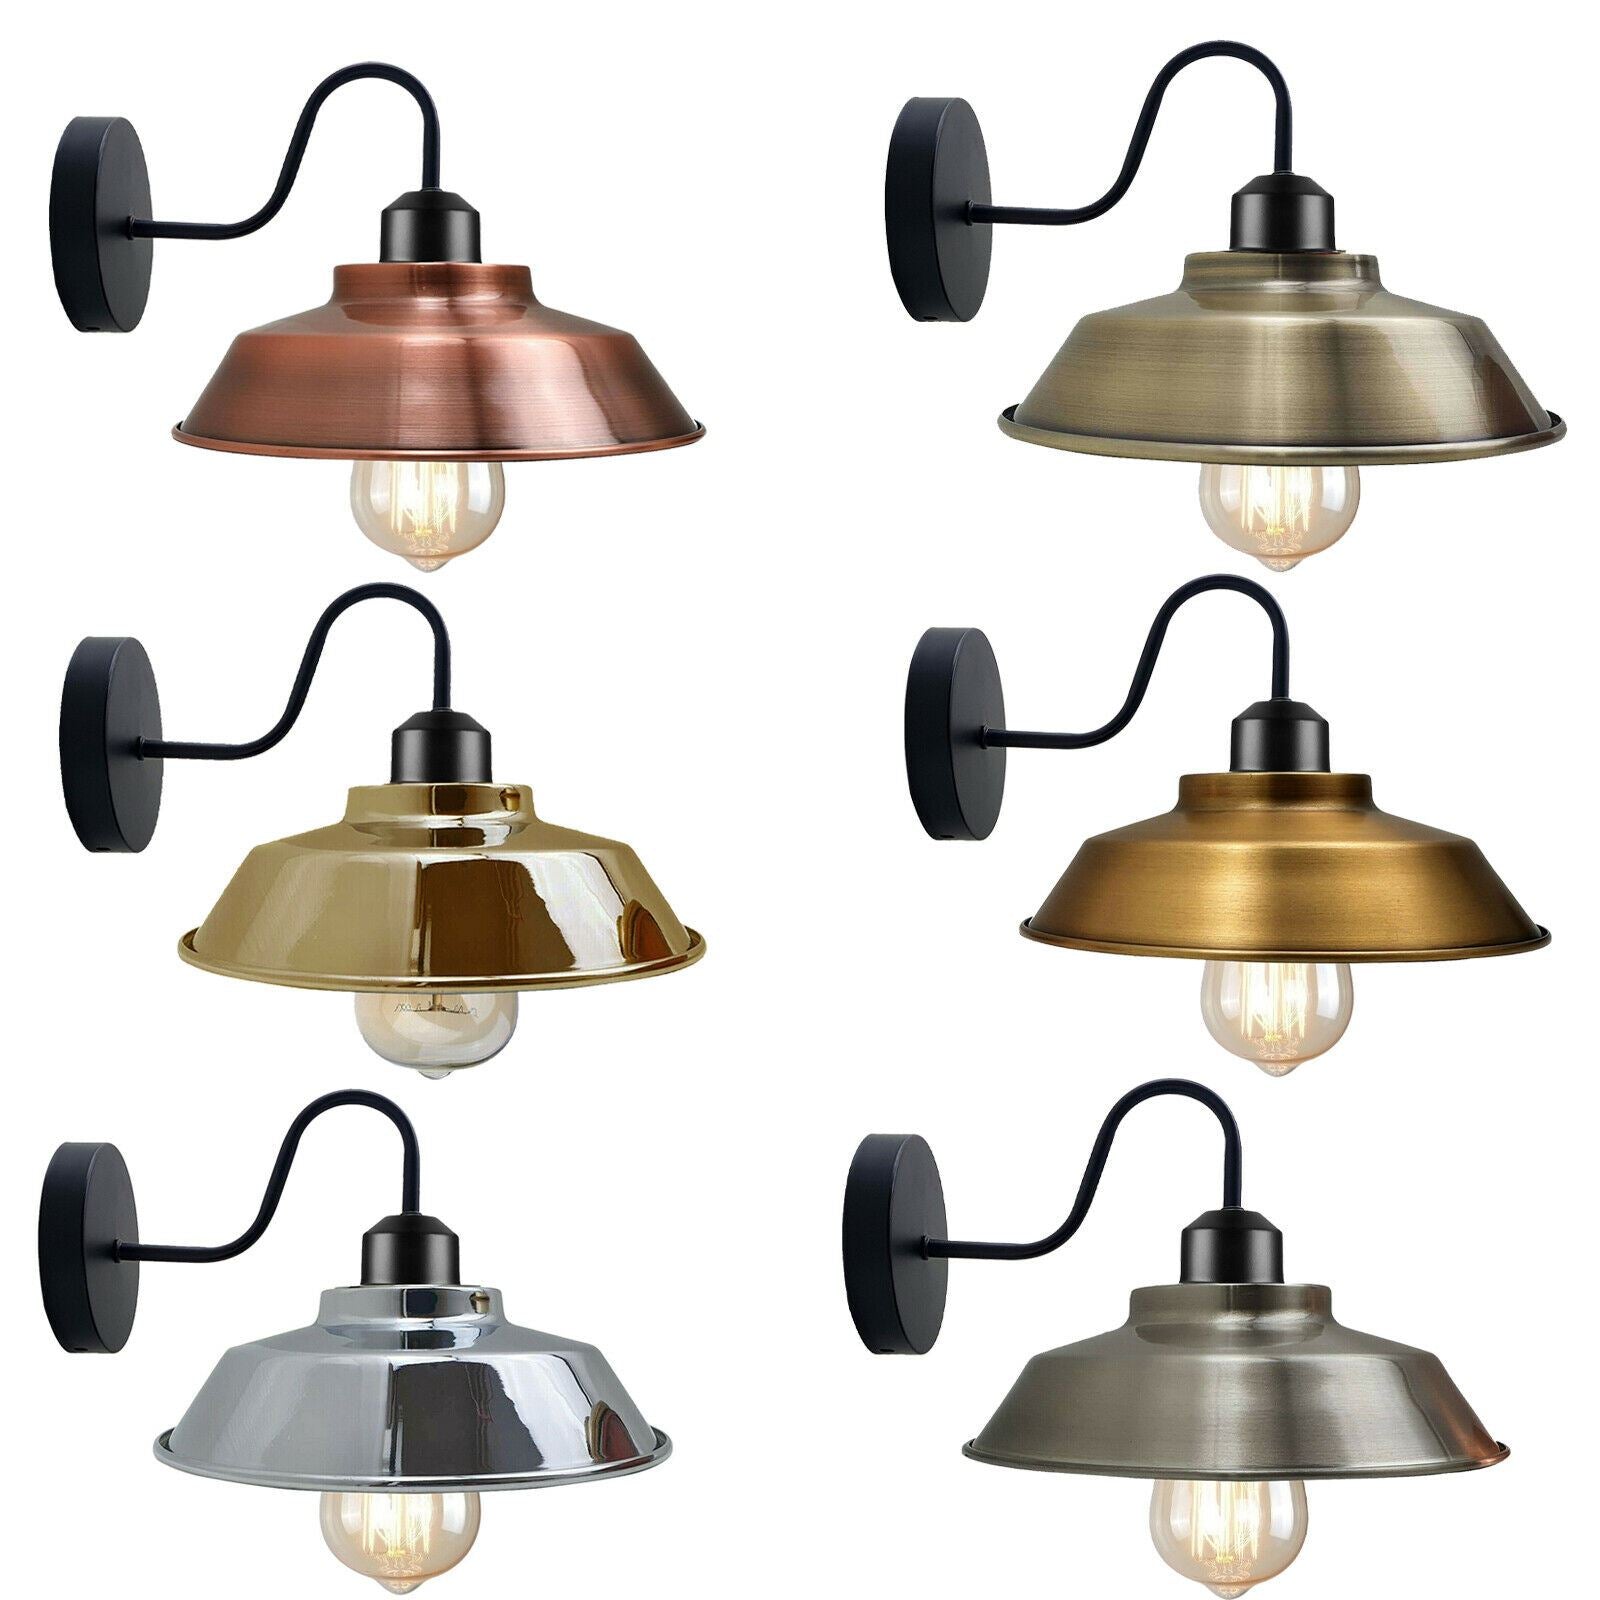 Retro Industrial Wall Lights Fittings E27 Indoor Sconce Metal Bowl Shape Shade For Basement, Bedroom, Home Office~1186 - LEDSone UK Ltd